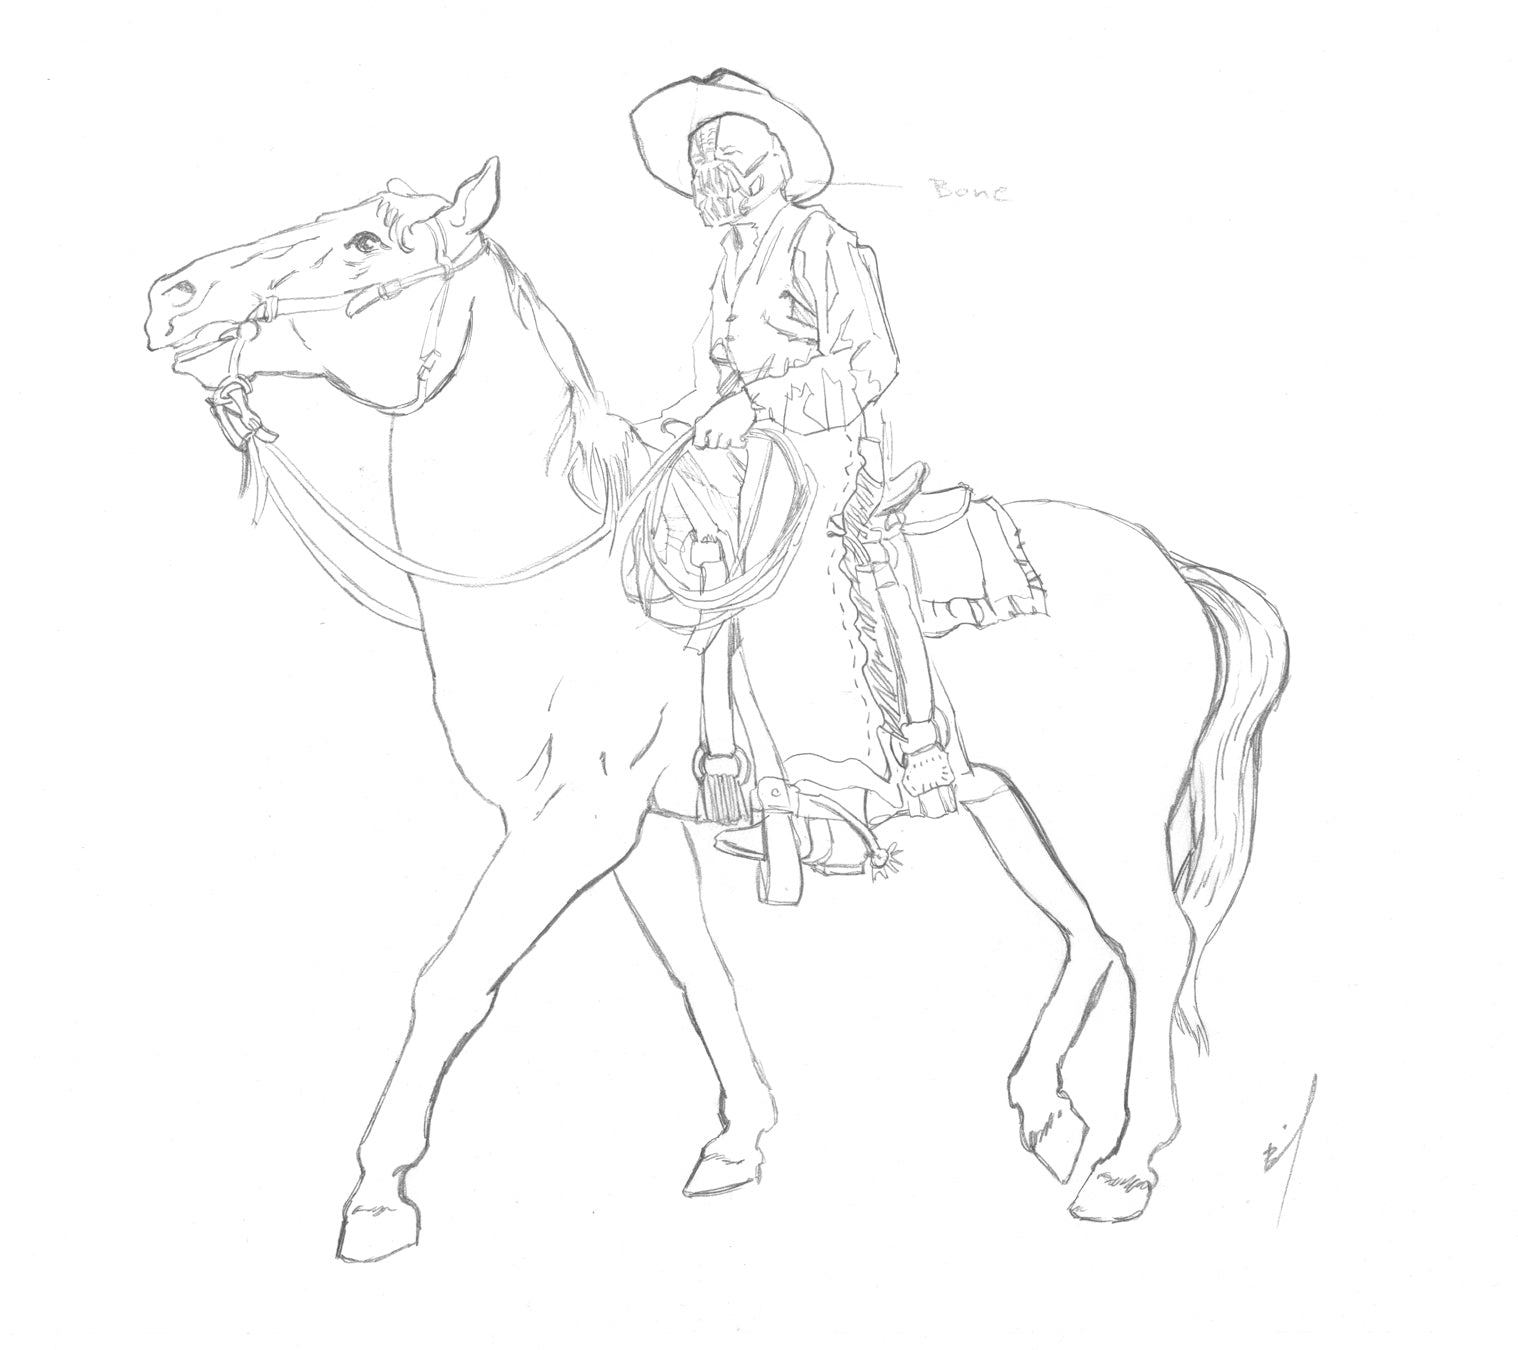 Hand drawn sketch, attributes of cowboy | Stock vector | Colourbox